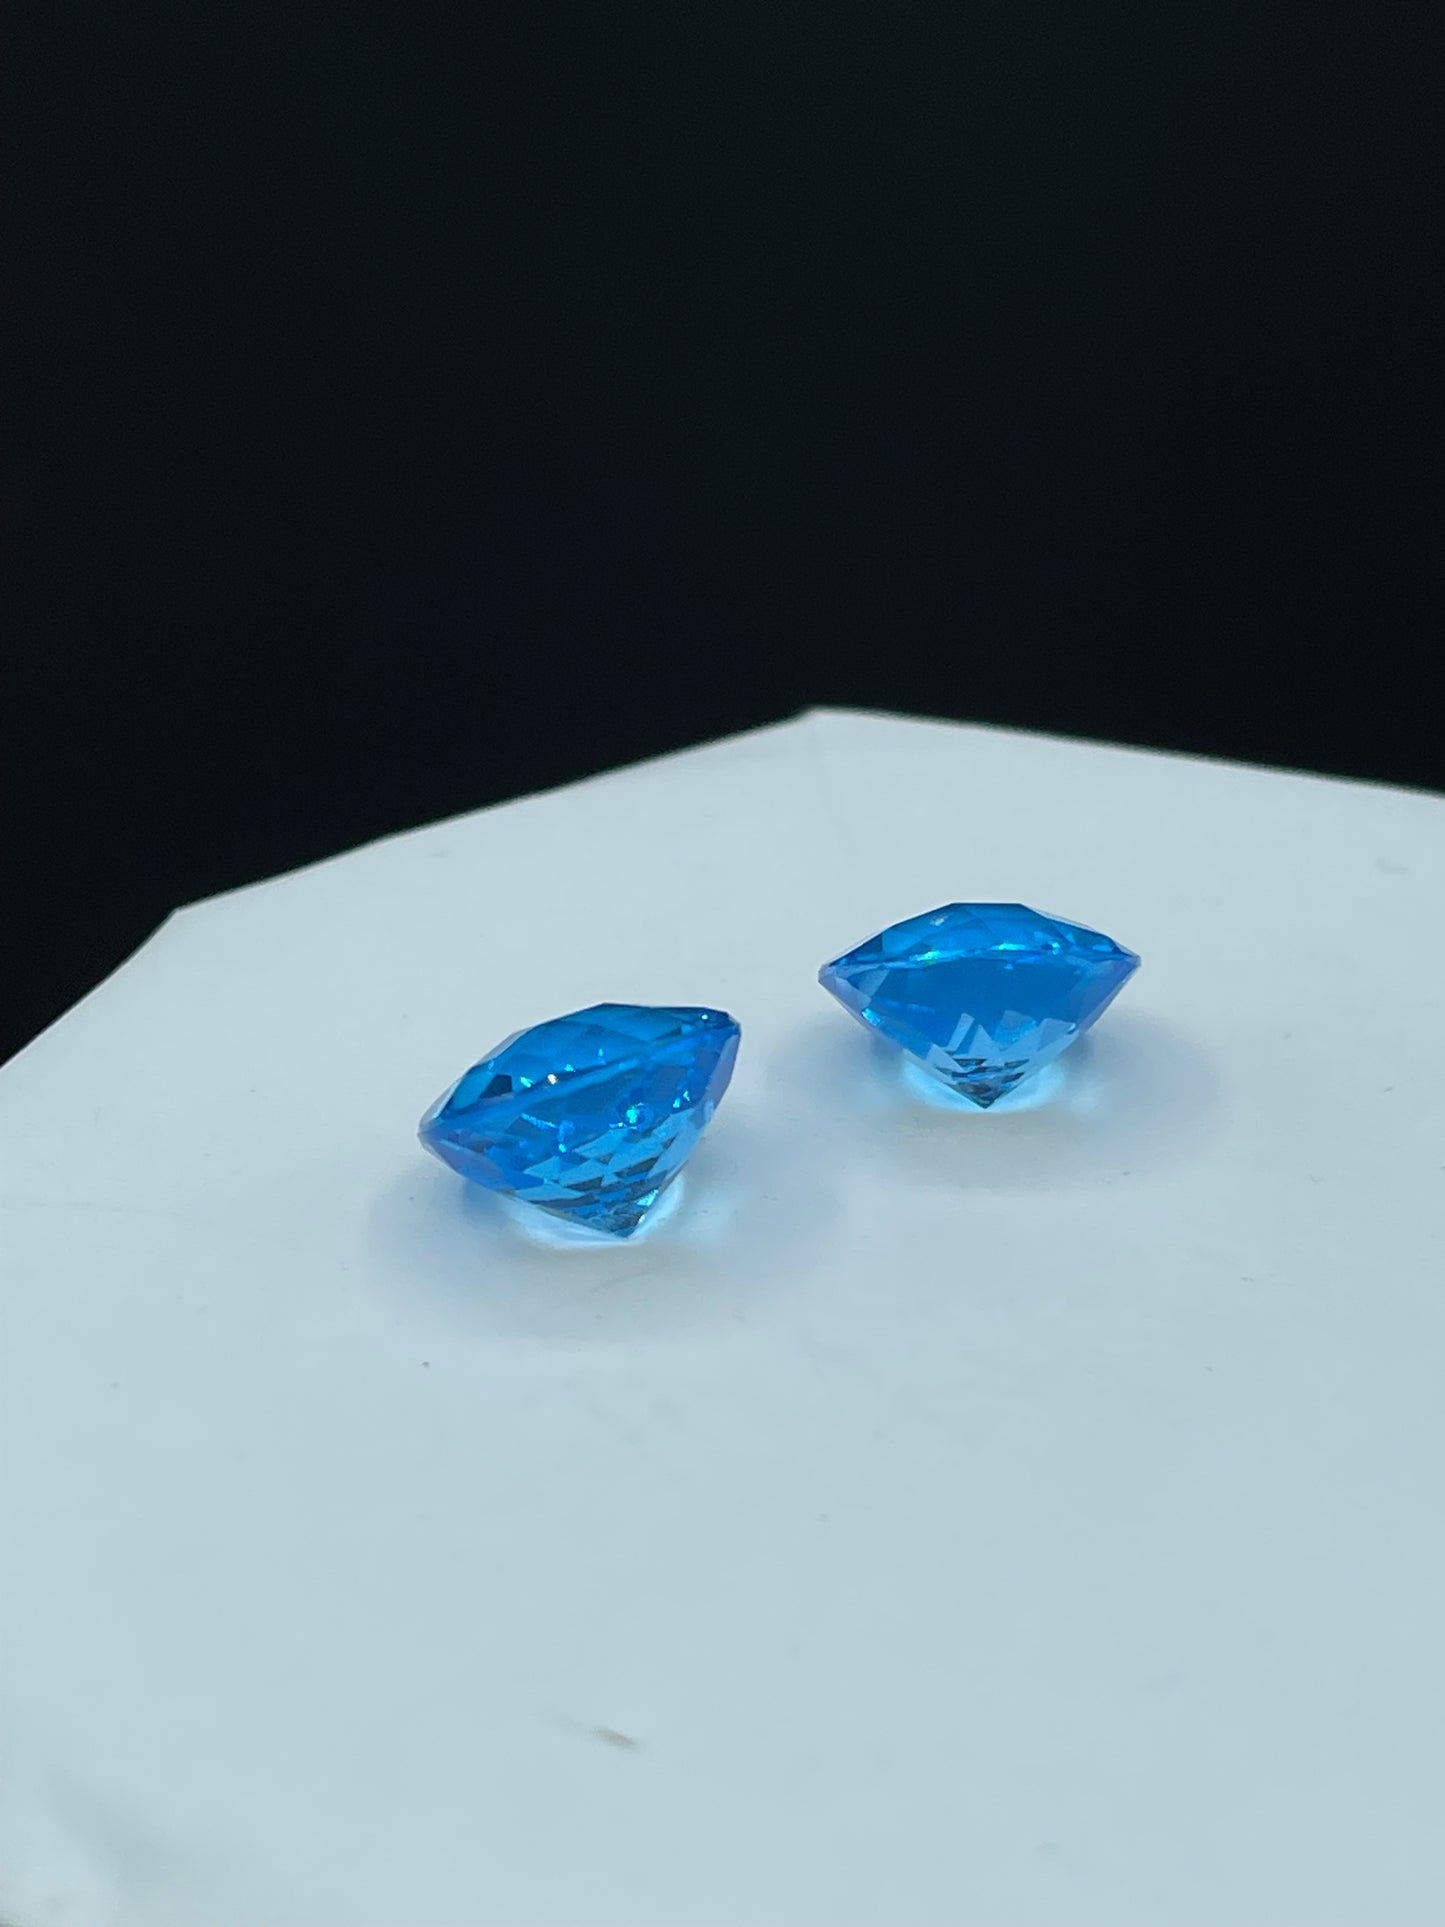 23.08 Carat Super Swiss Blue Topaz Round Cut Matching Pair Loose Gemstones 14.05 x 14.05 x 9.53 MM